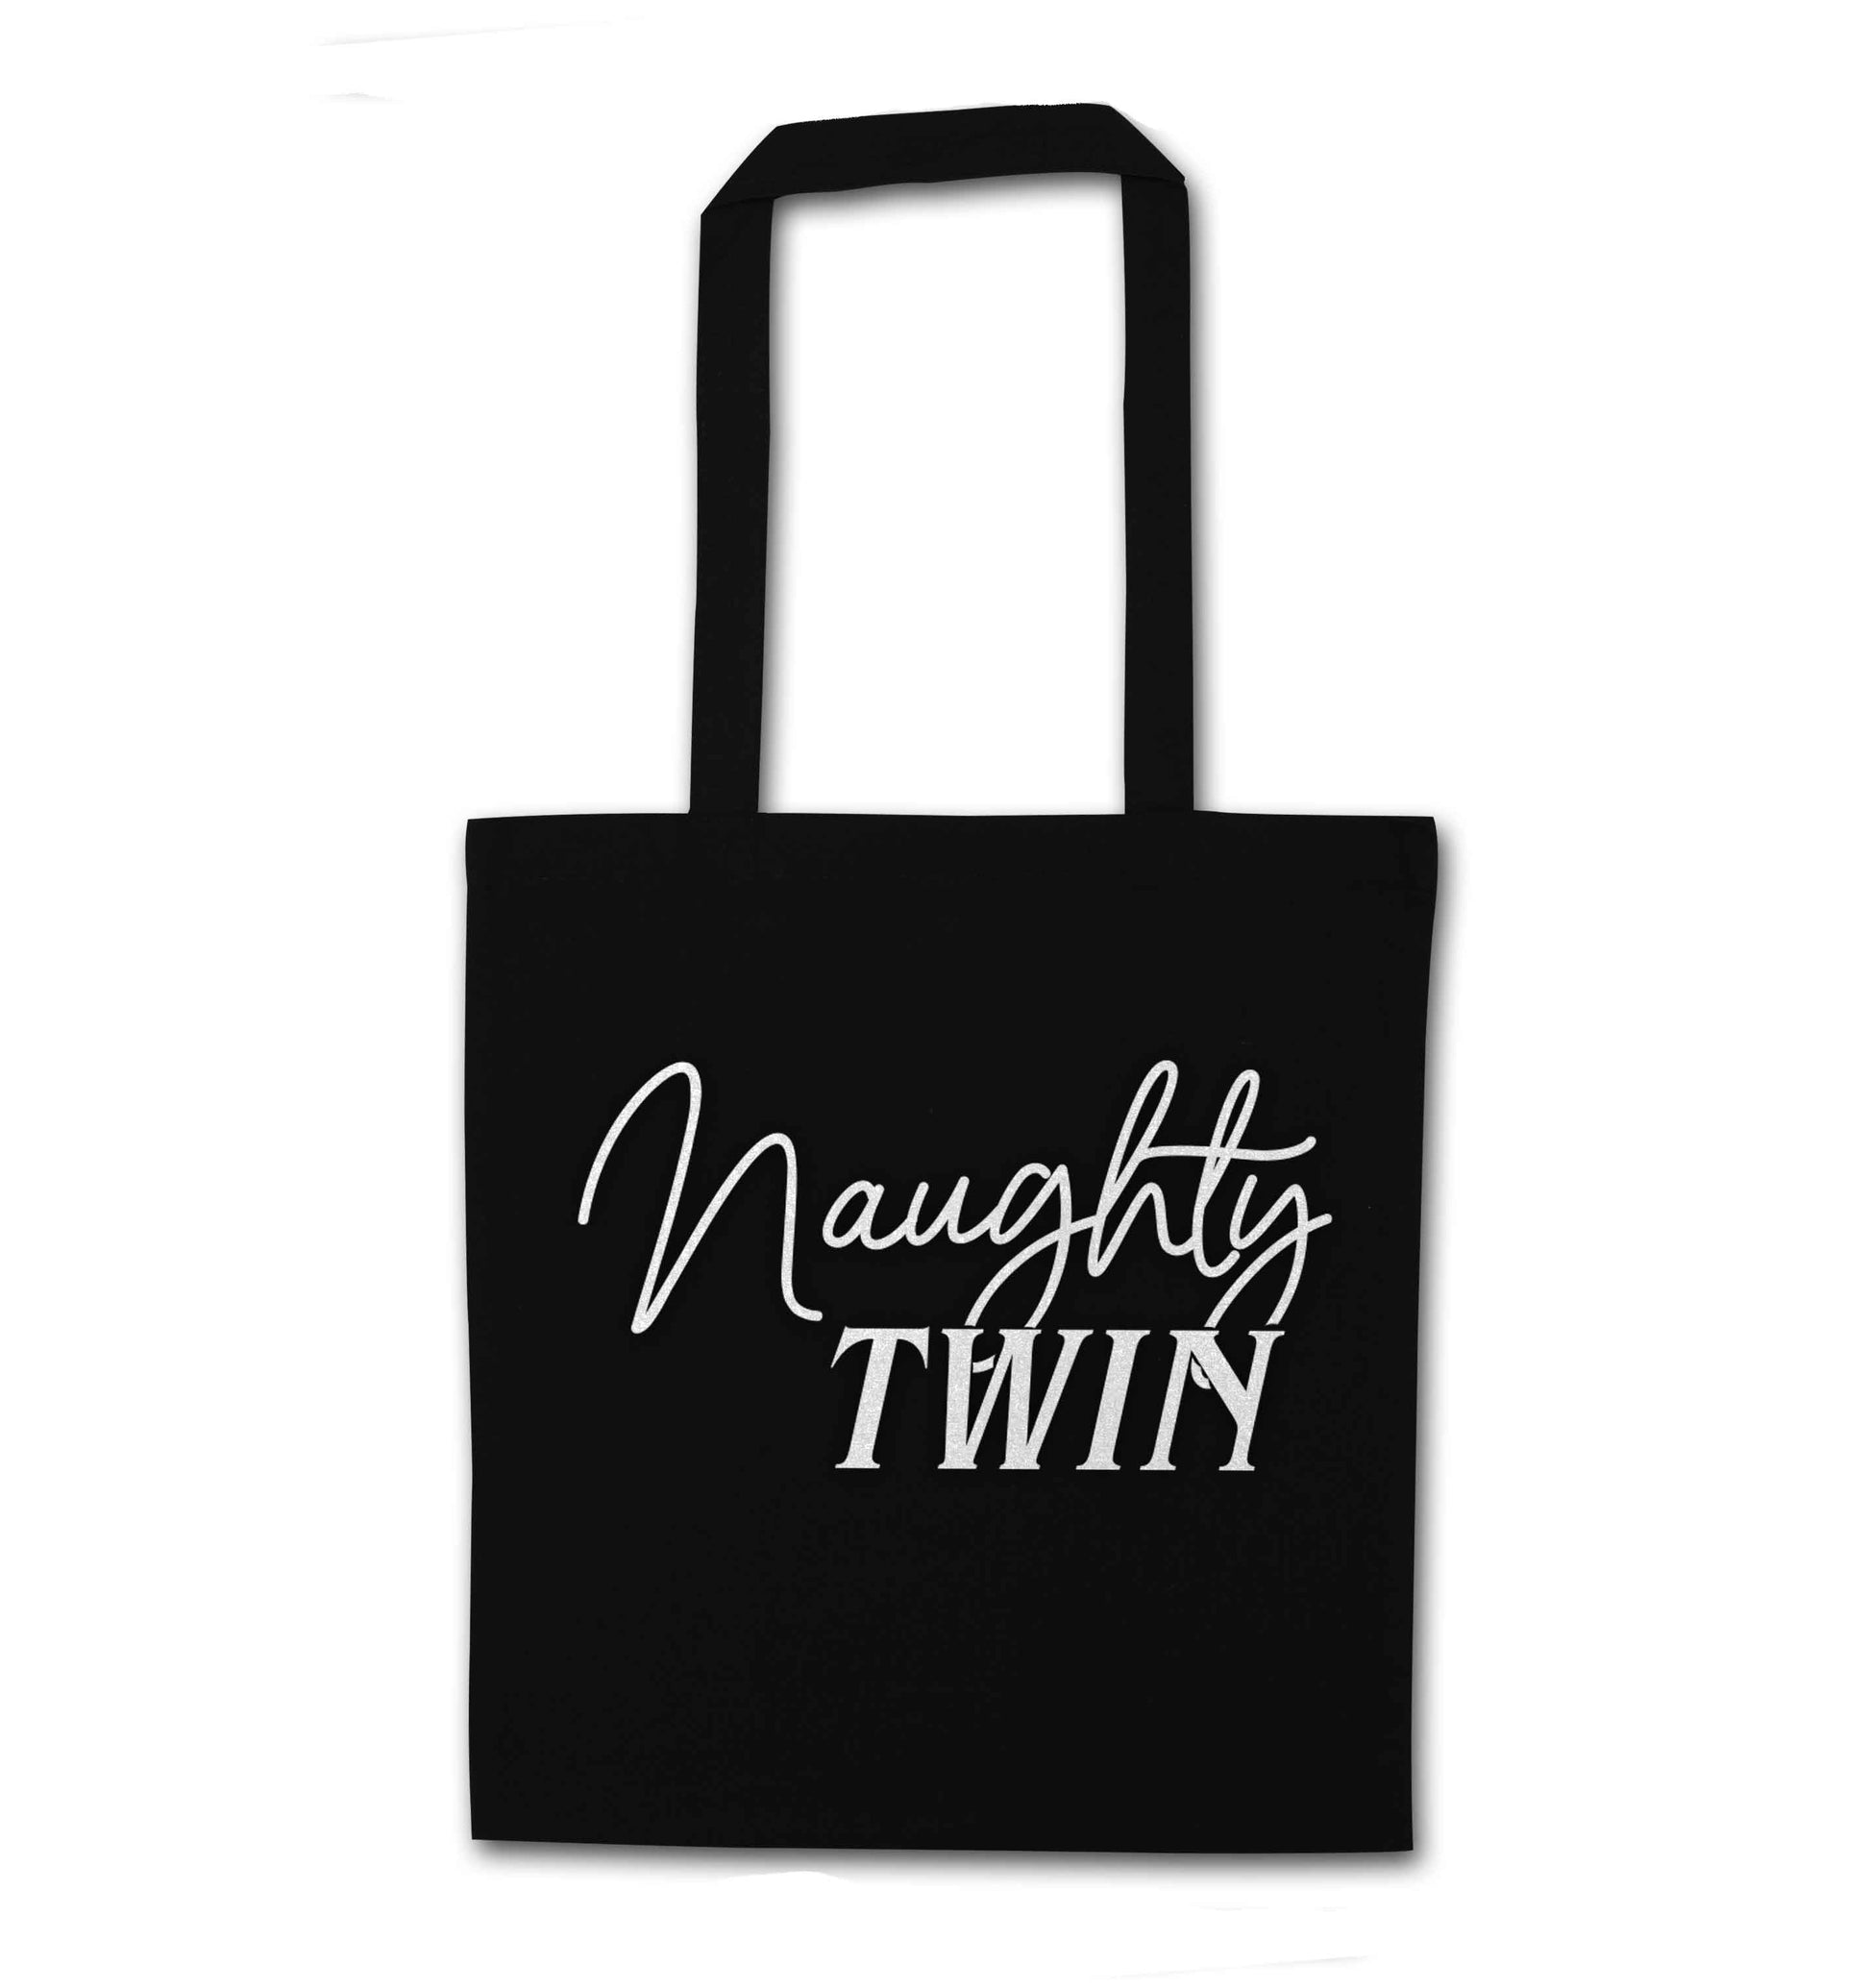 Naughty twin black tote bag